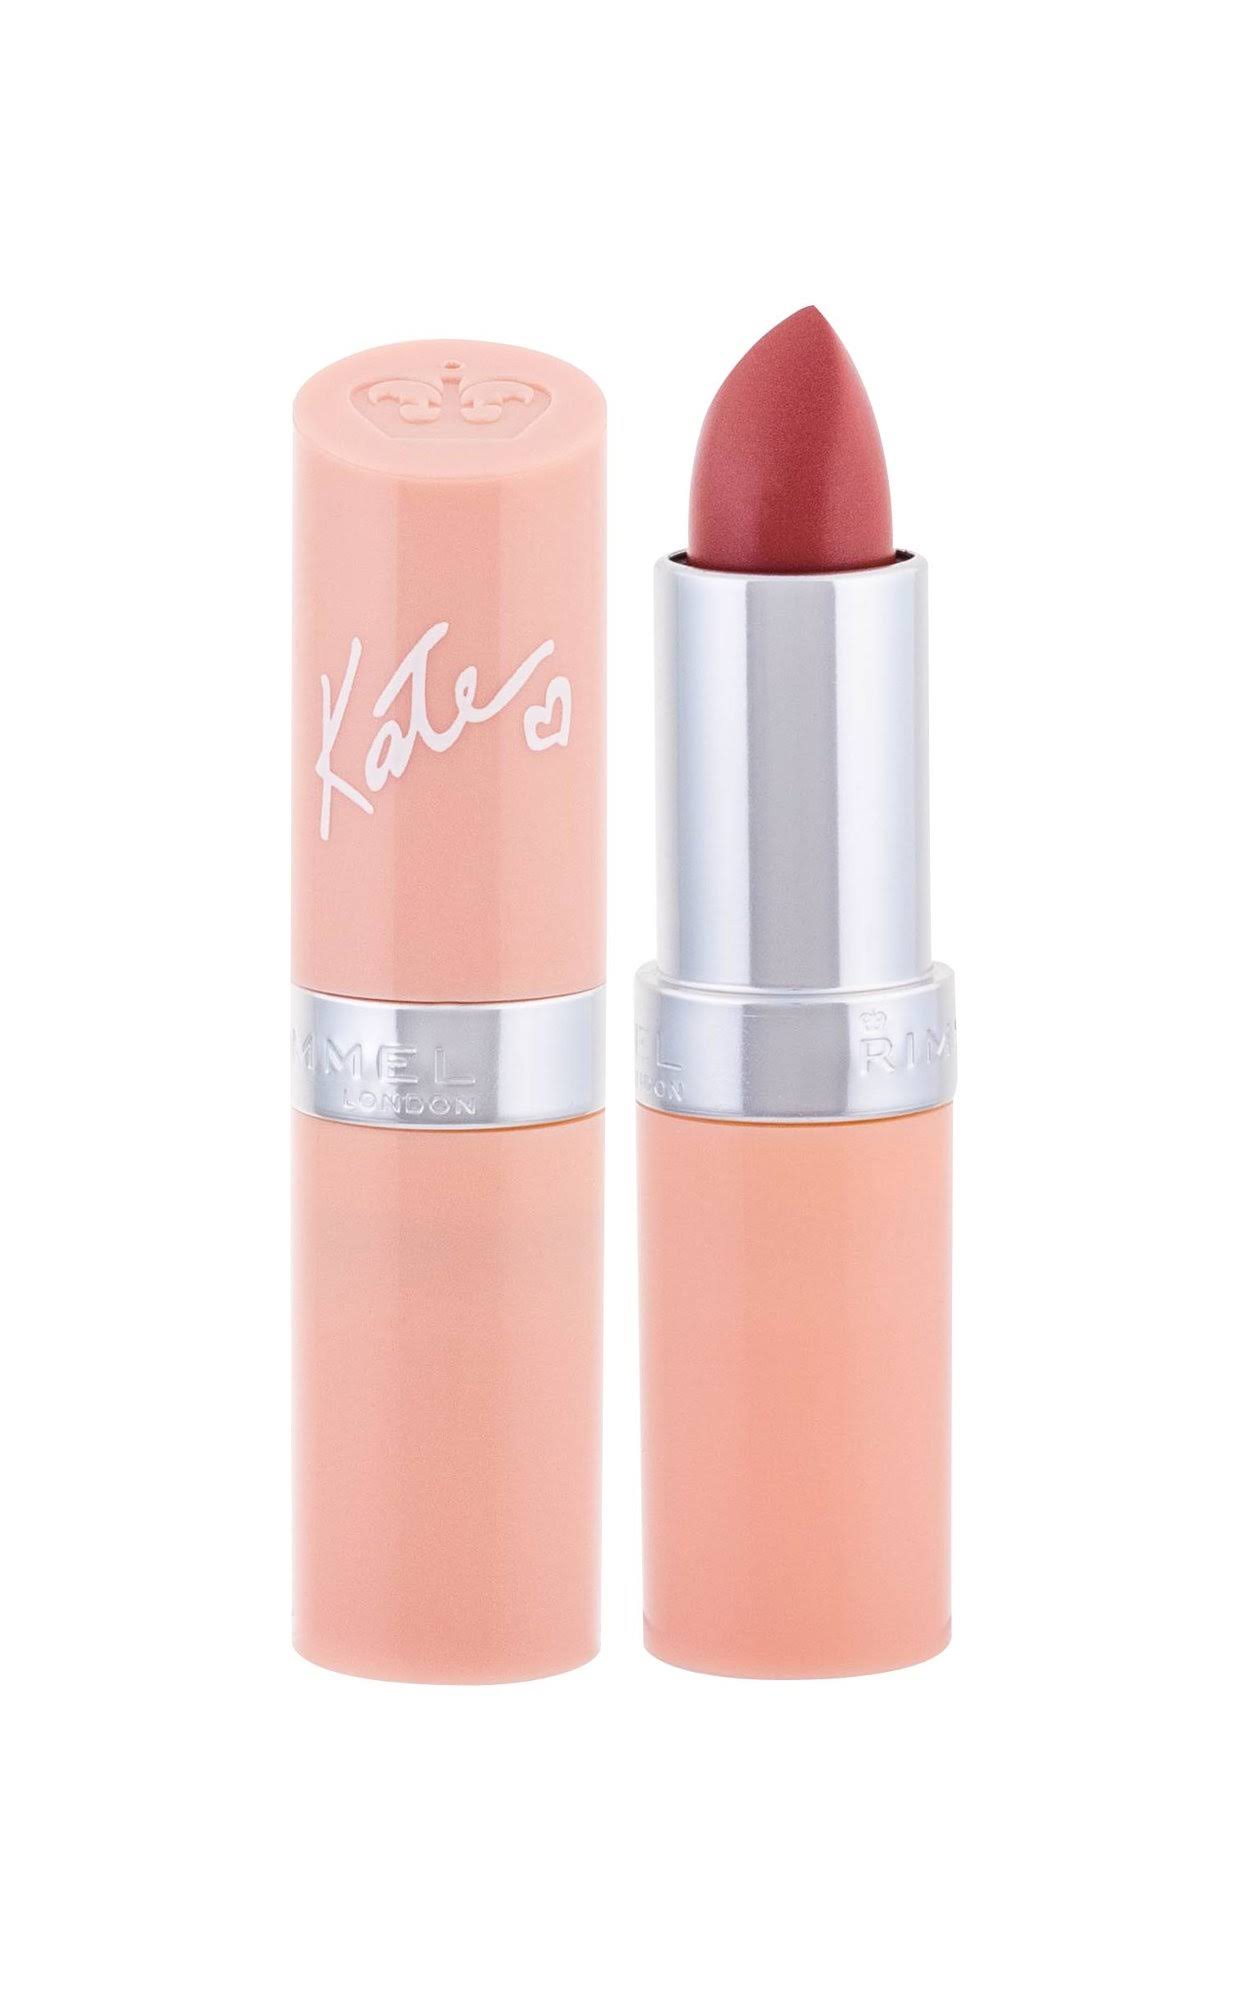 Kate Moss Rimmel Lasting Finish Lipstick - Nude Shade 045, 4g